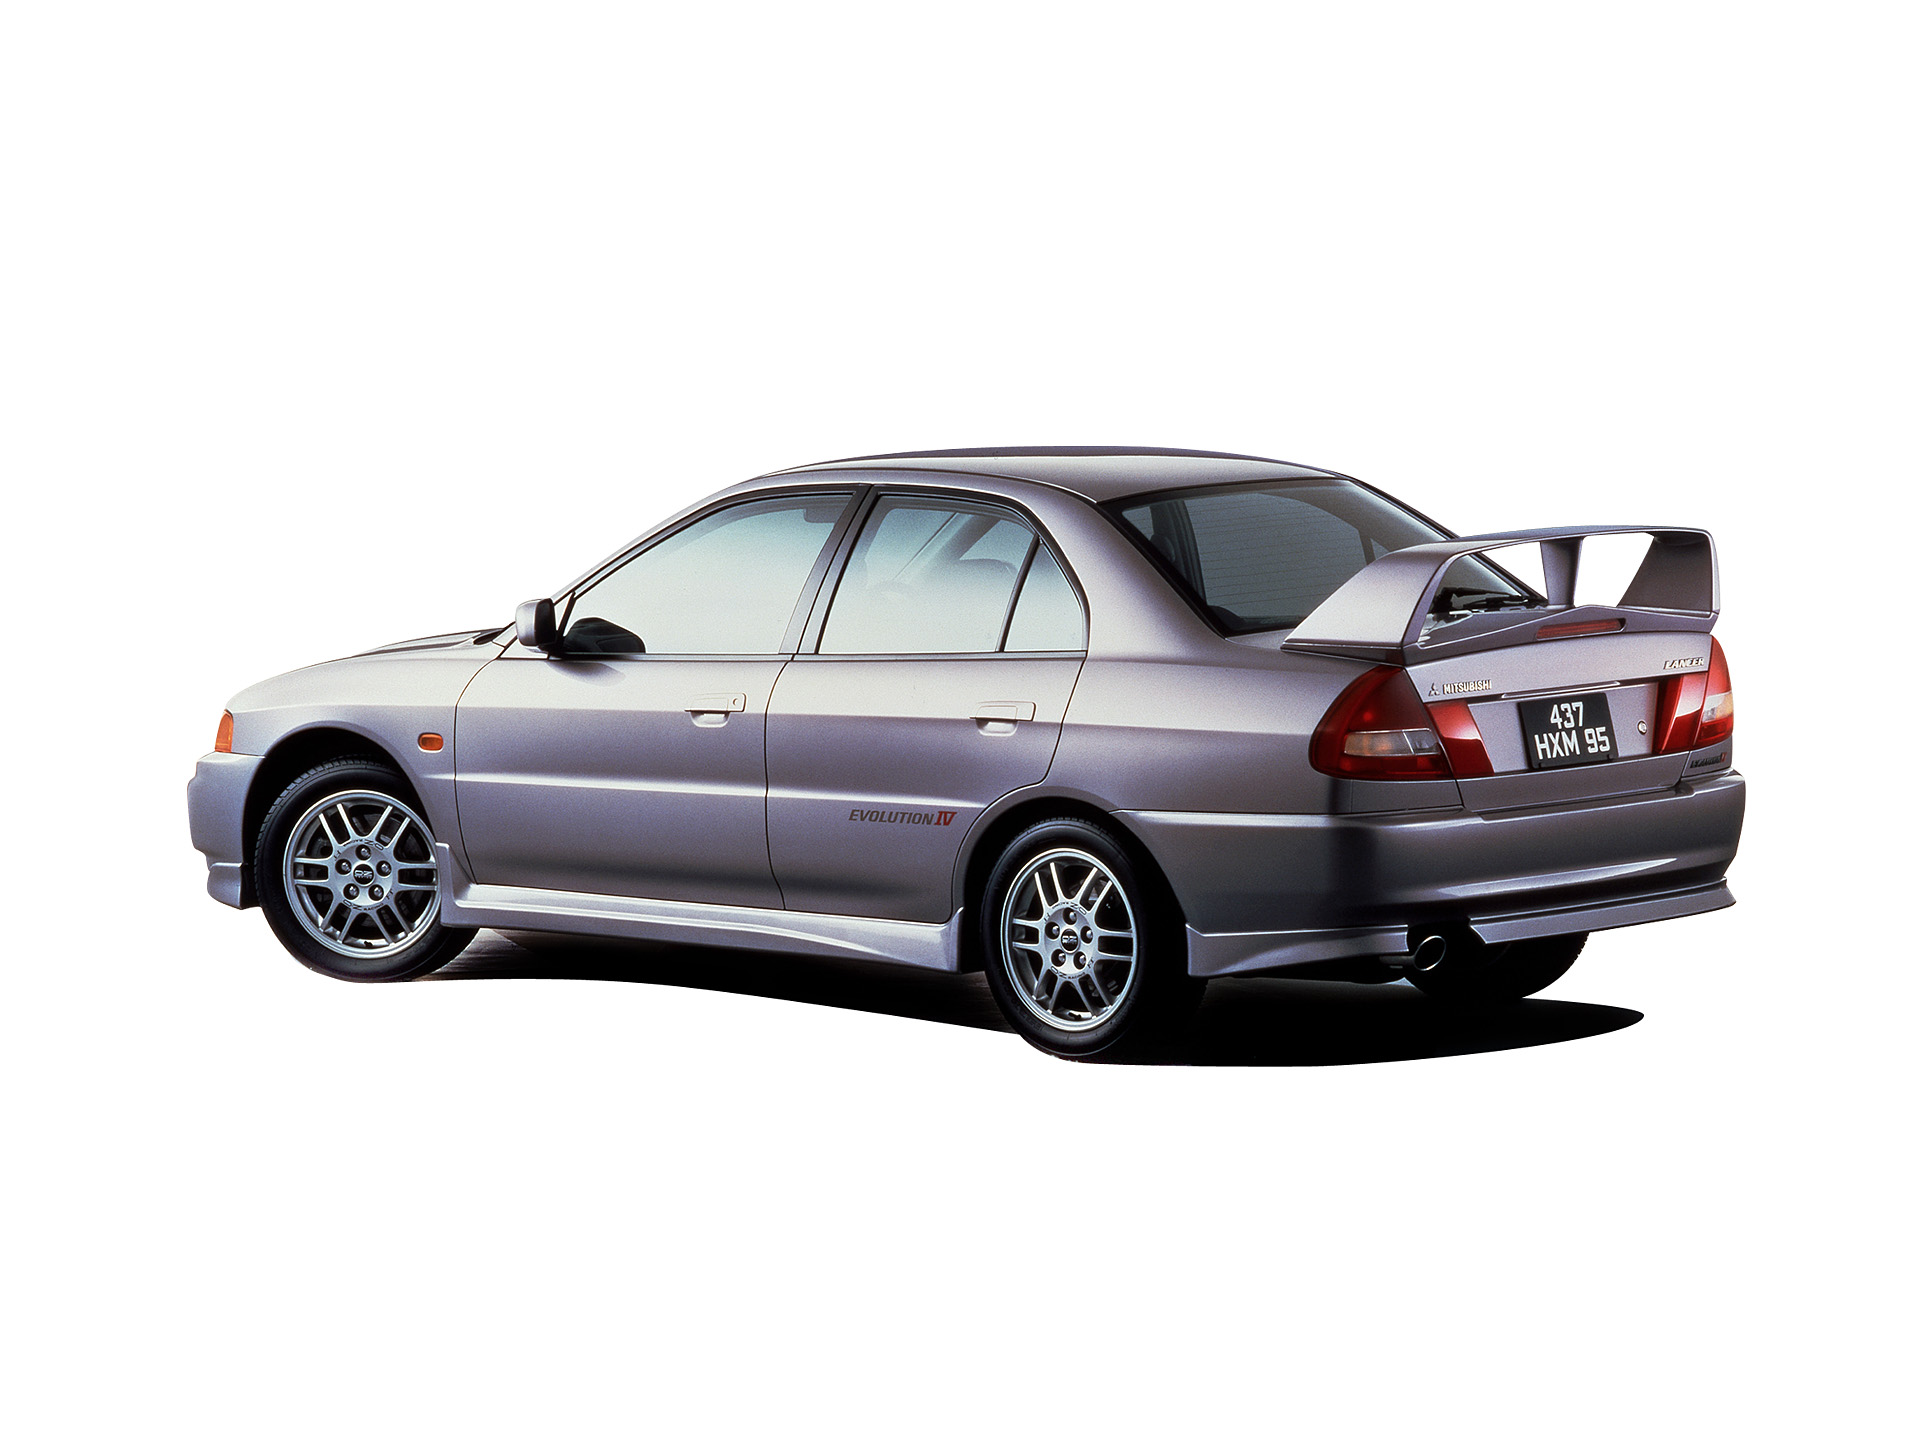  1996 Mitsubishi Lancer GSR Evolution IV Wallpaper.